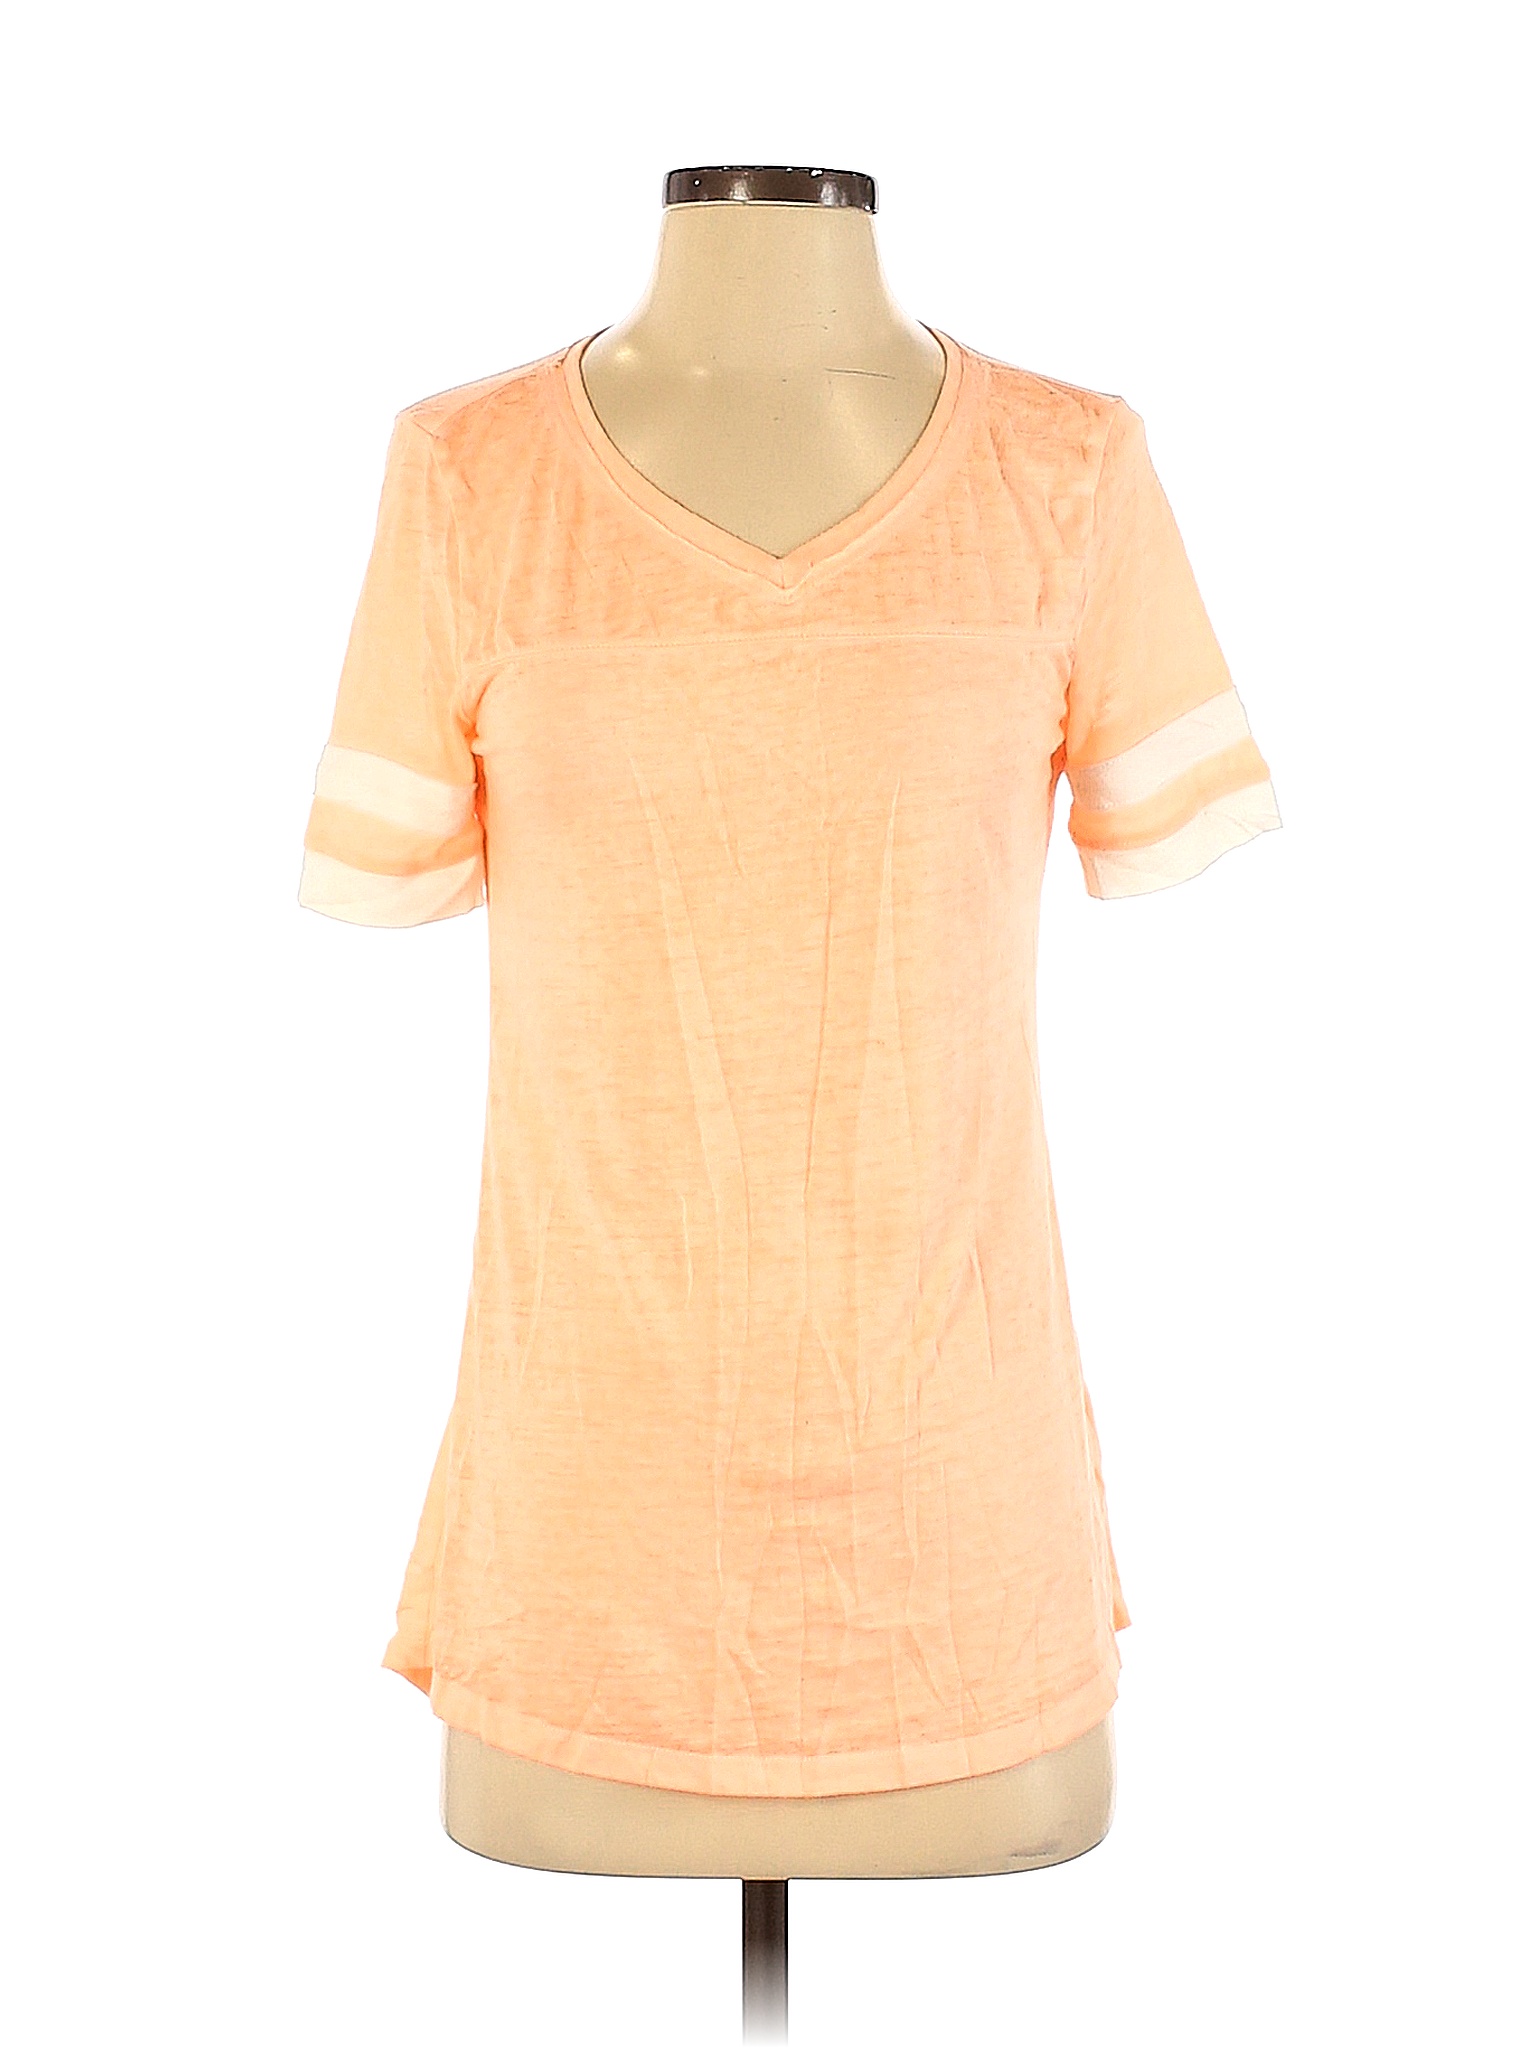 Maurices Orange Short Sleeve T-Shirt Size S - 50% off | ThredUp